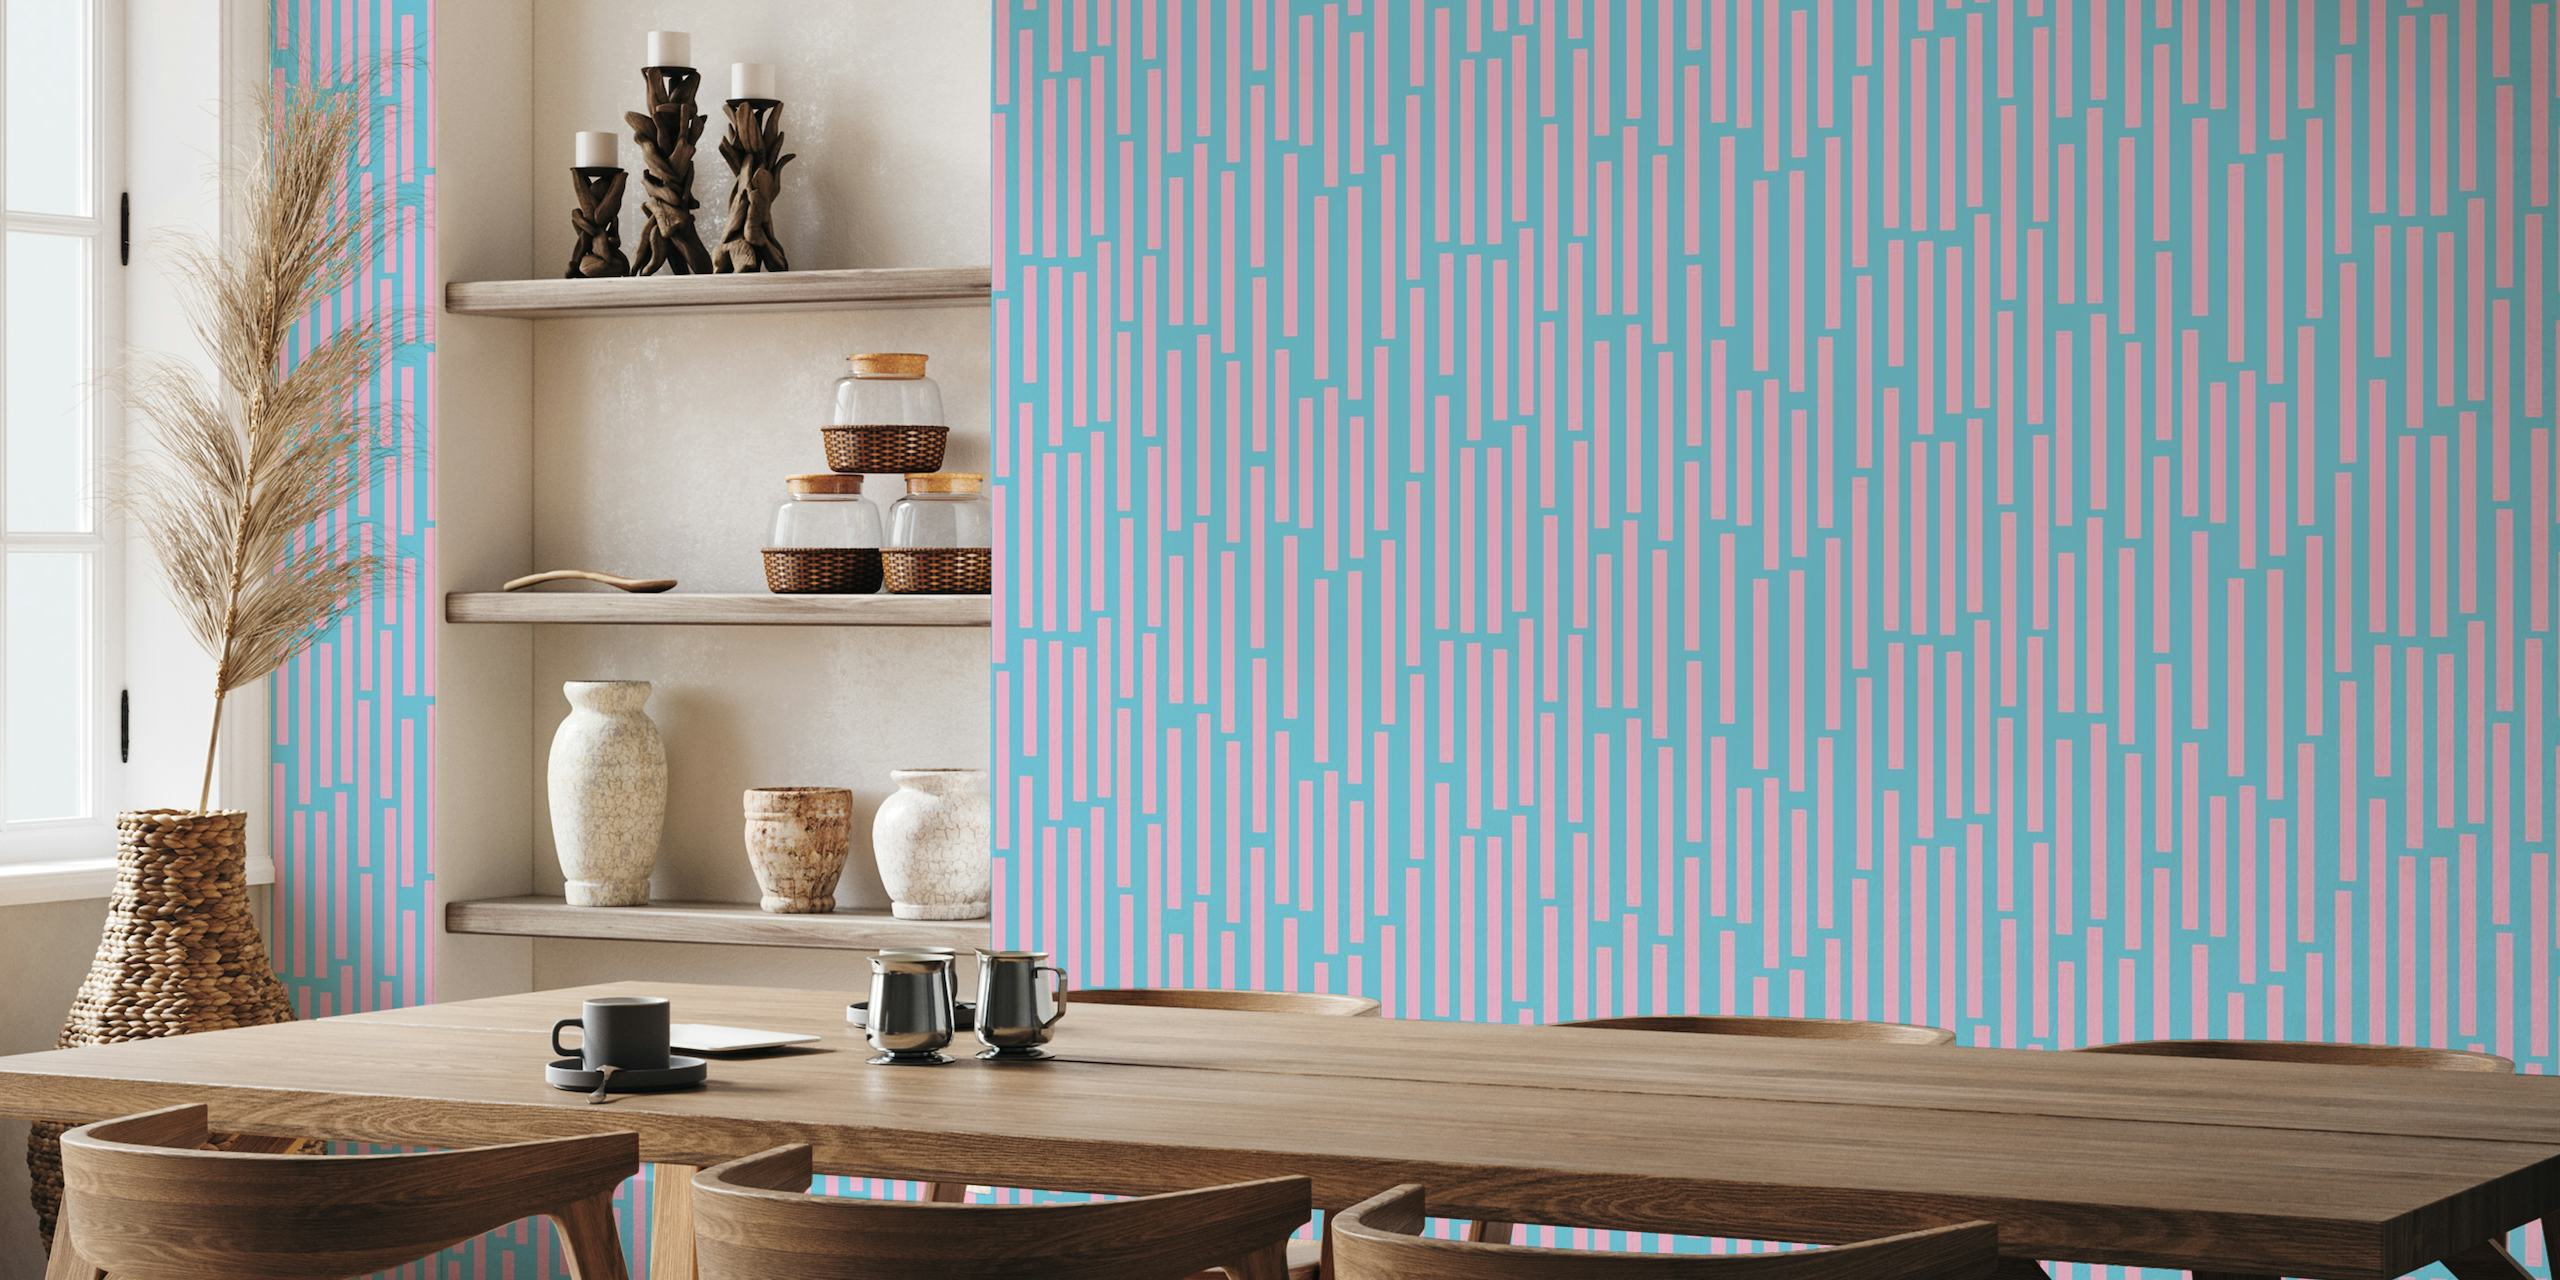 SHOWERS Vertical Geo Stripes - Pink on Blue wallpaper